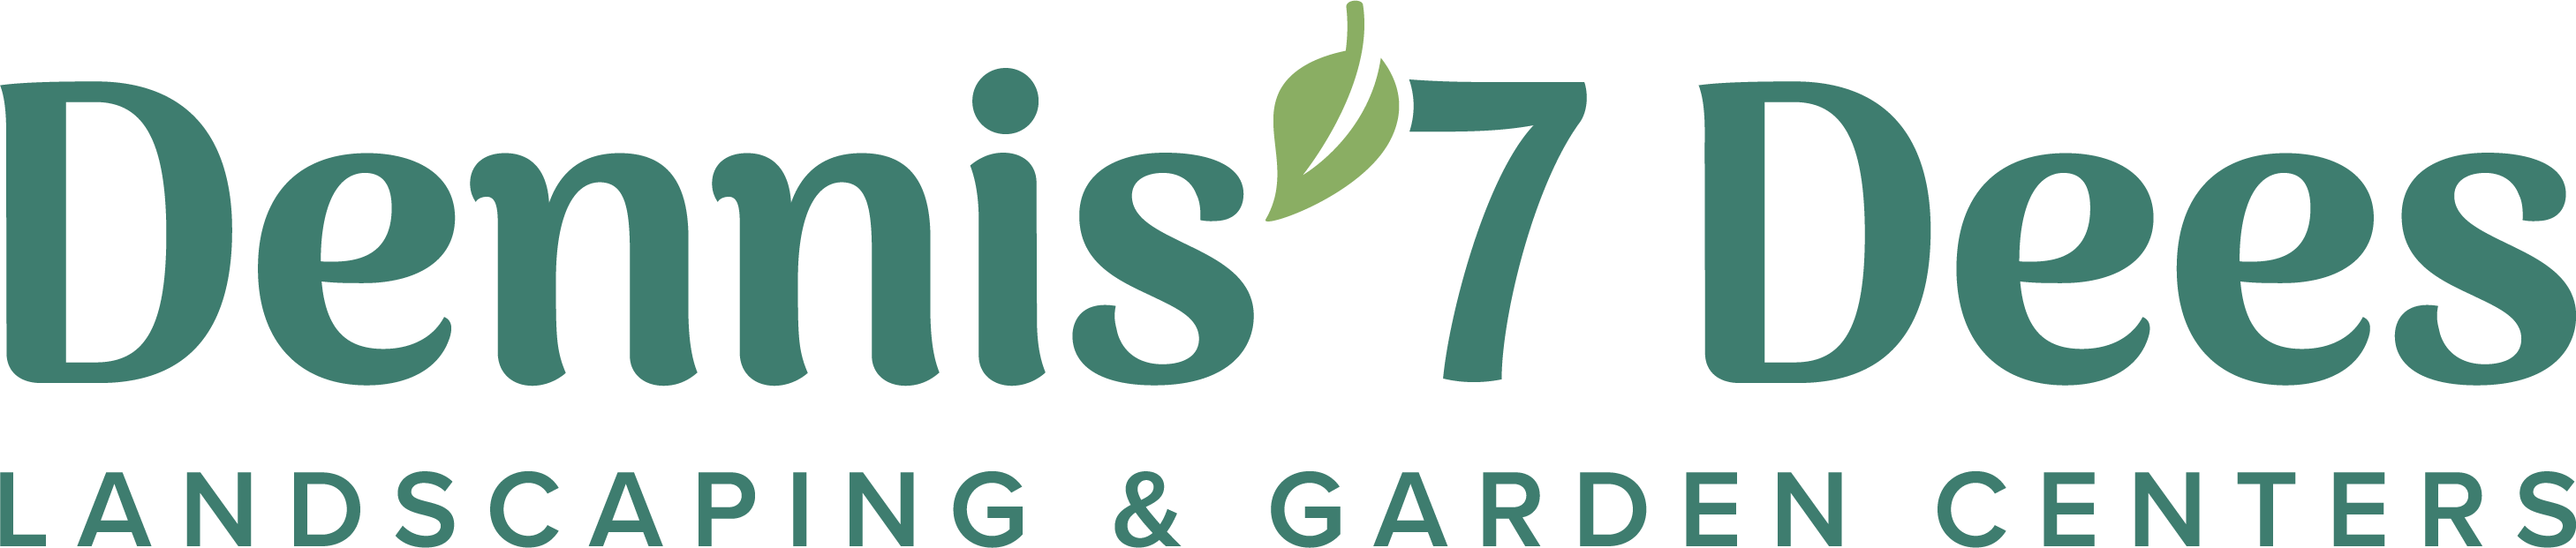 Dennis' 7 Dees Landscaping & Garden Centers Company Logo